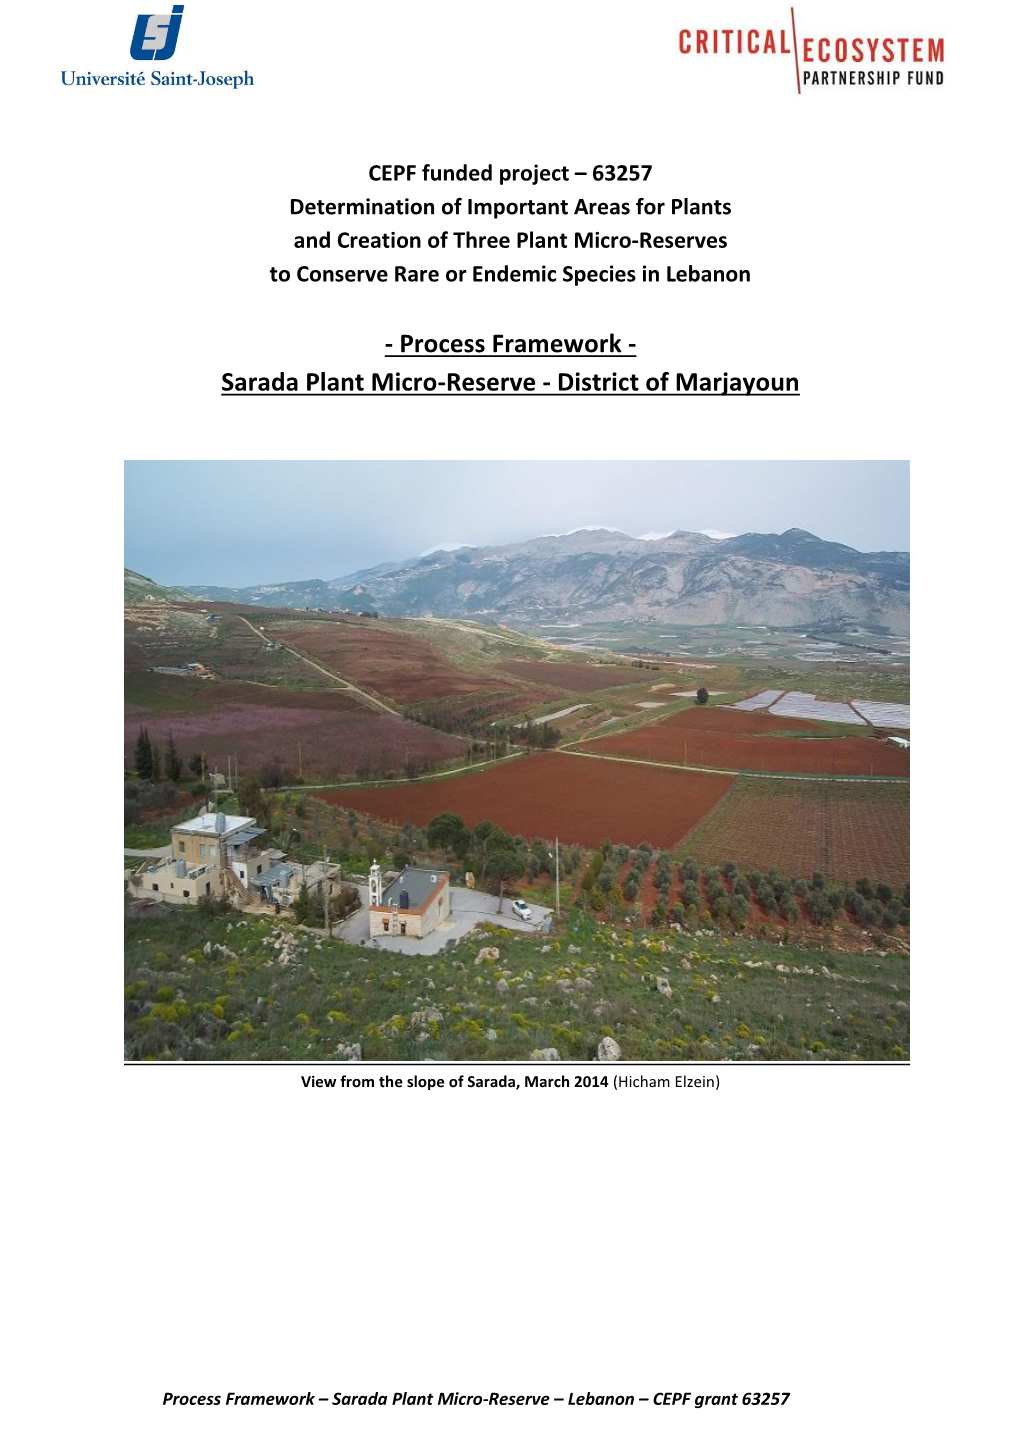 Process Framework - Sarada Plant Micro-Reserve - District of Marjayoun